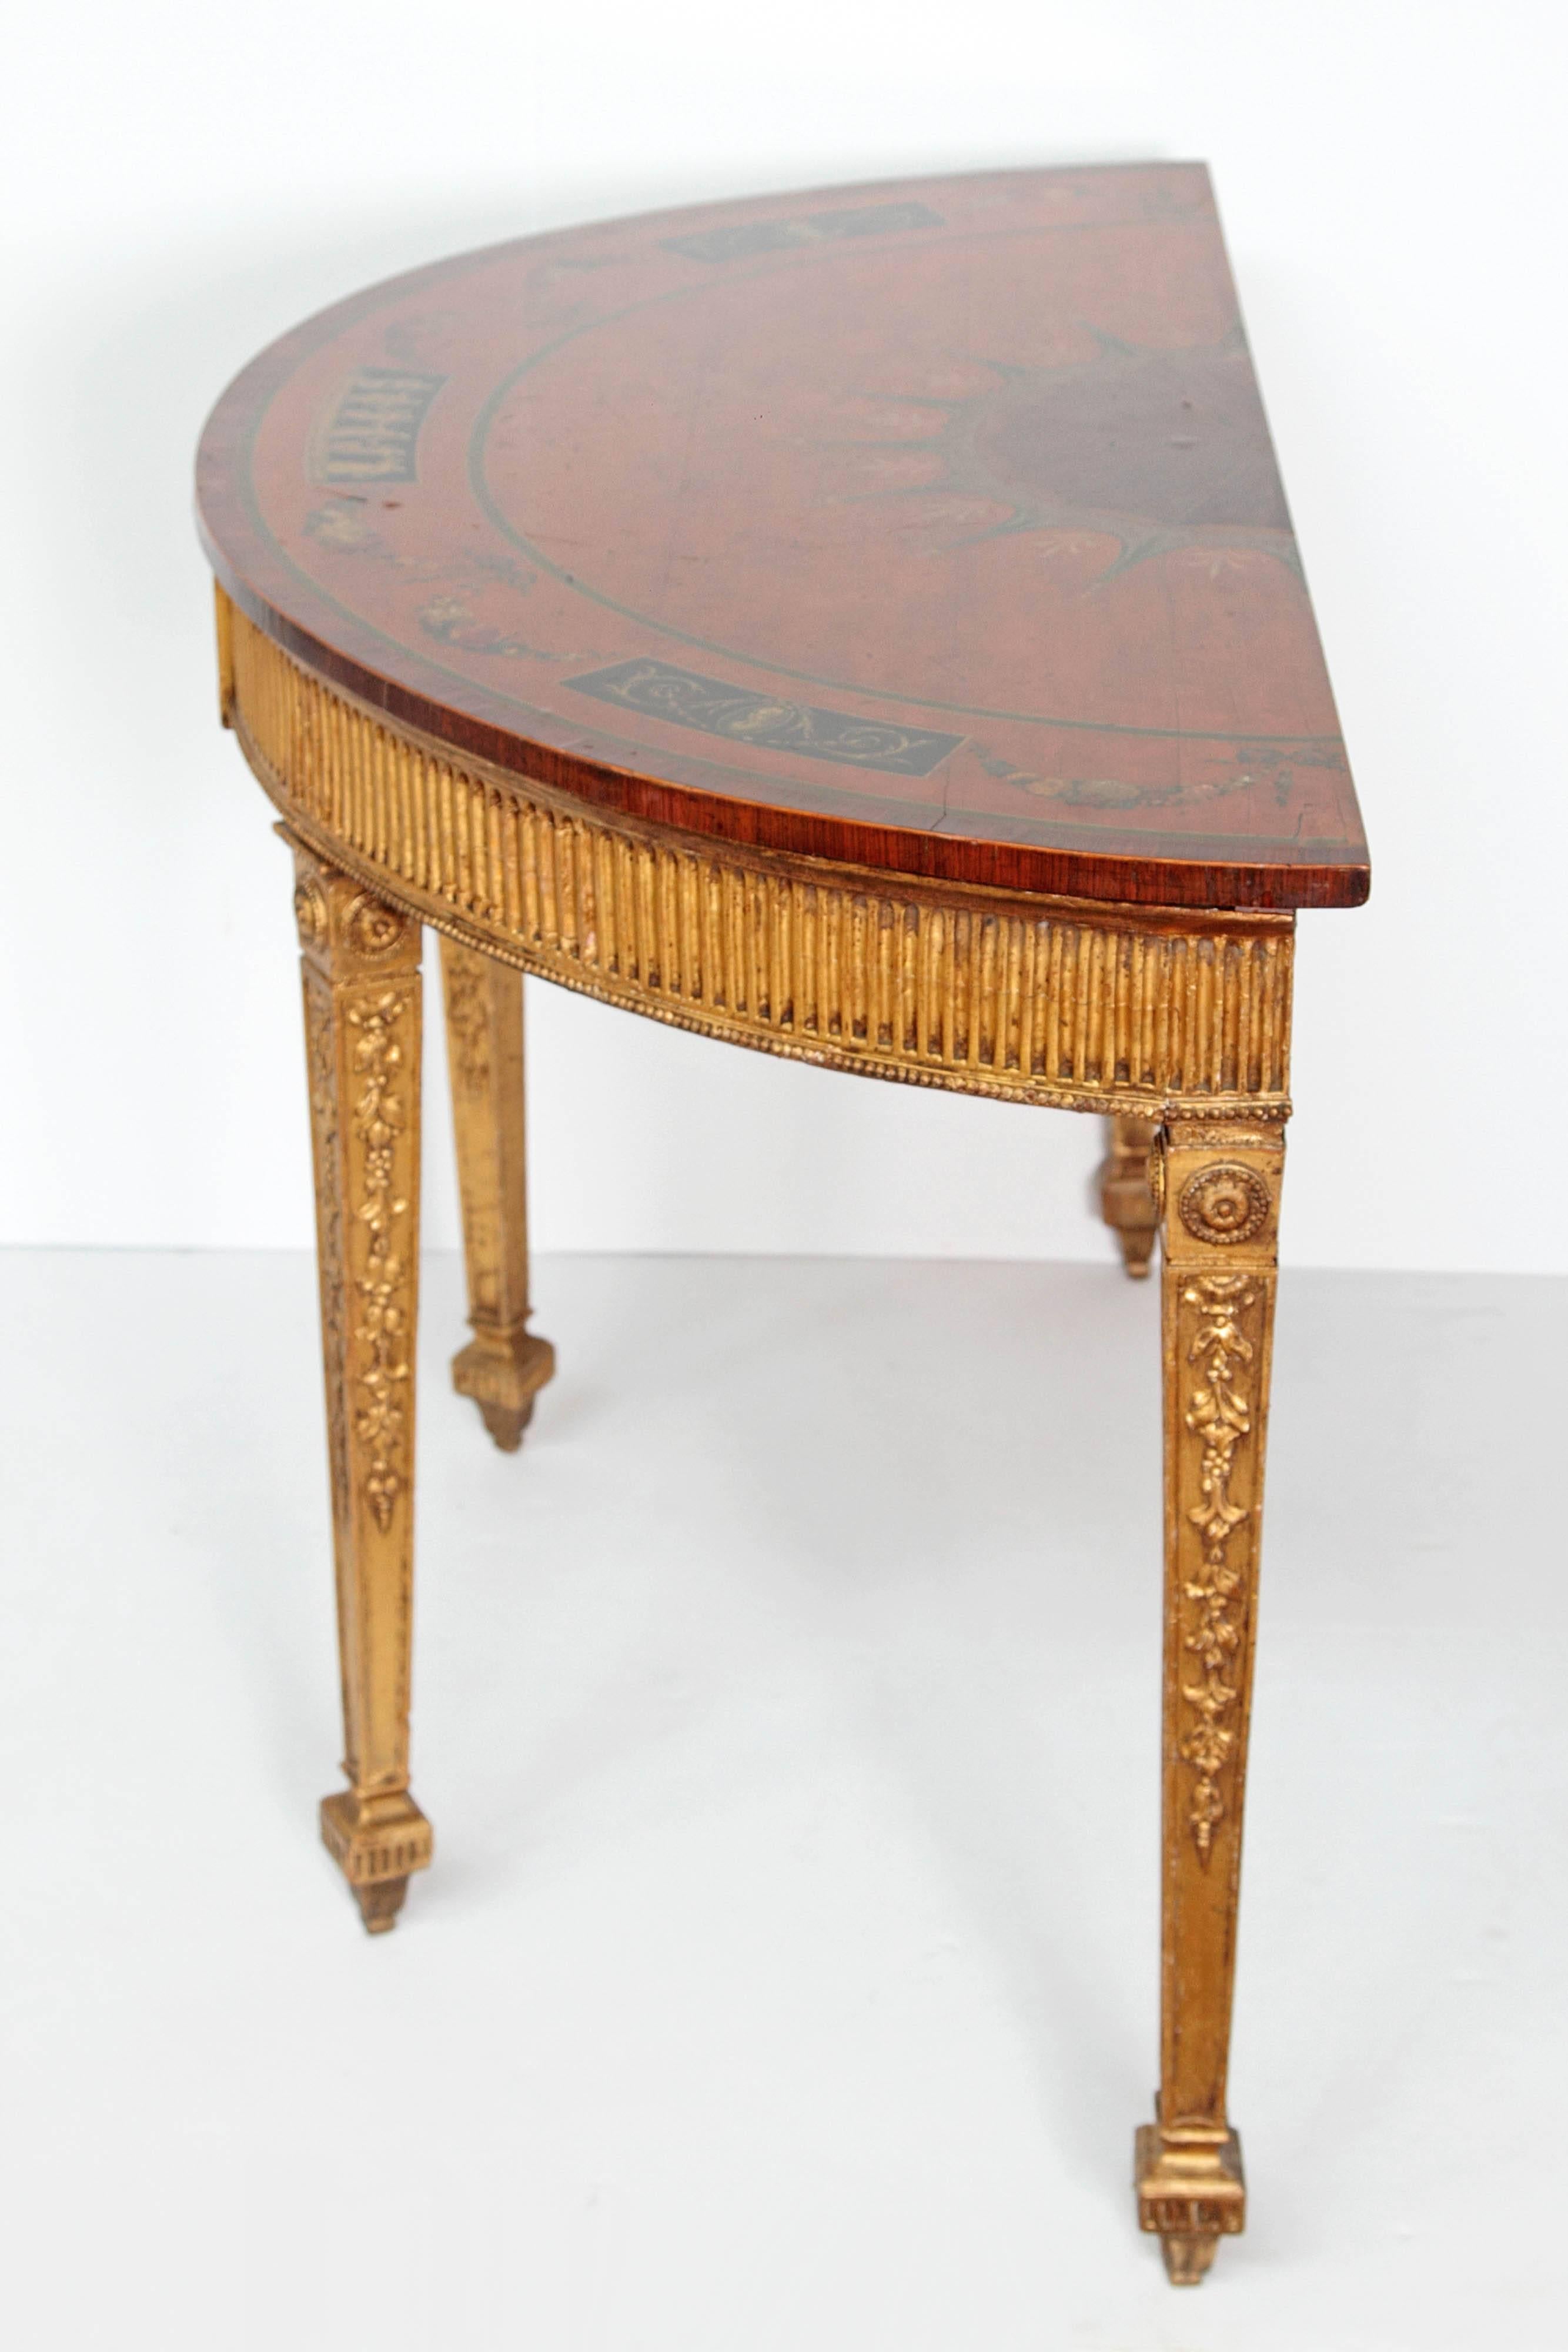 18th Century George III Adam Pier Table (Handgeschnitzt)